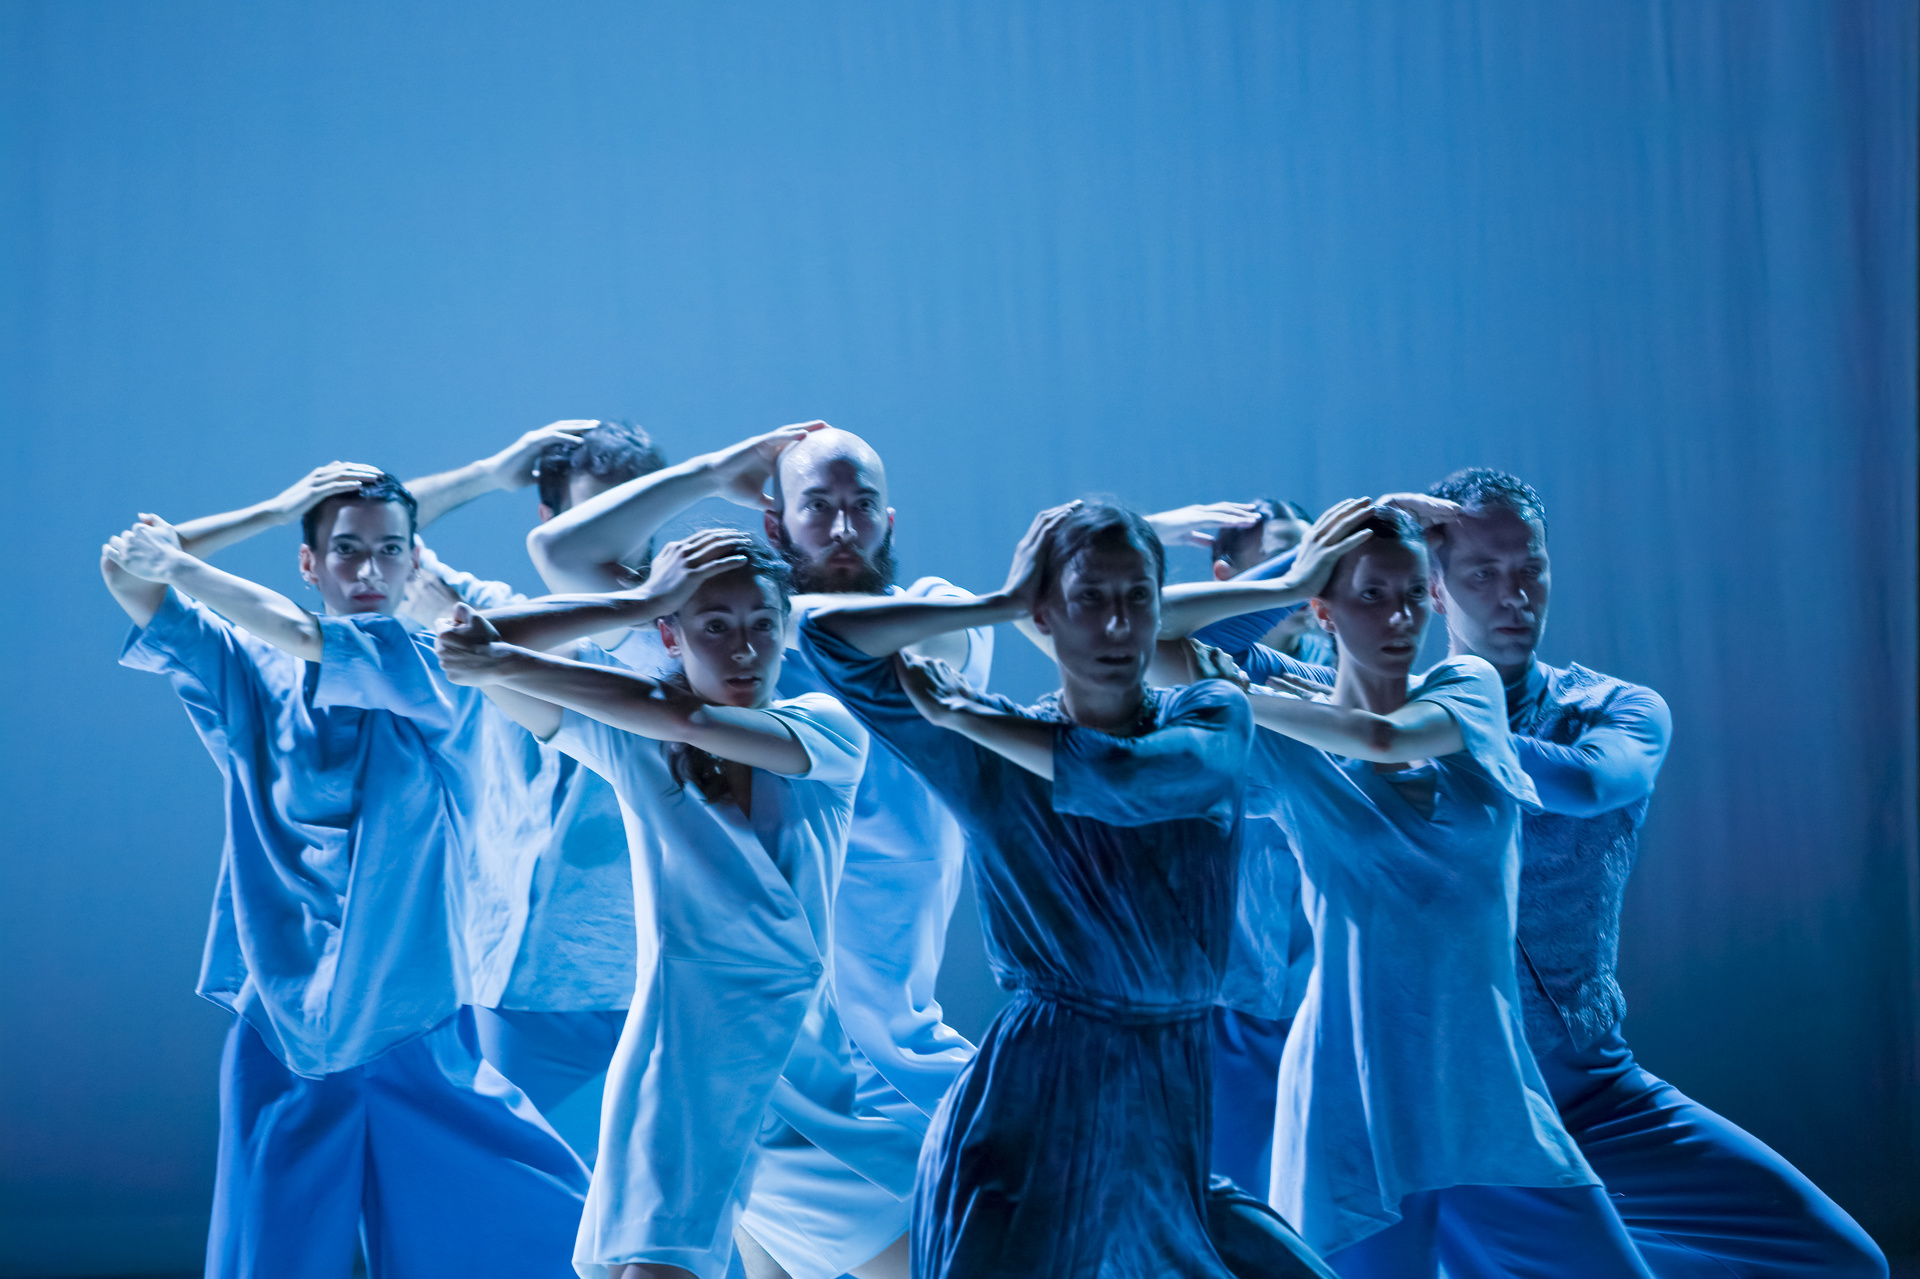 Das Ensemble von Thomas Noone Dance tanzt die Choreografie "Medea". © ZDF/Luis San Andres